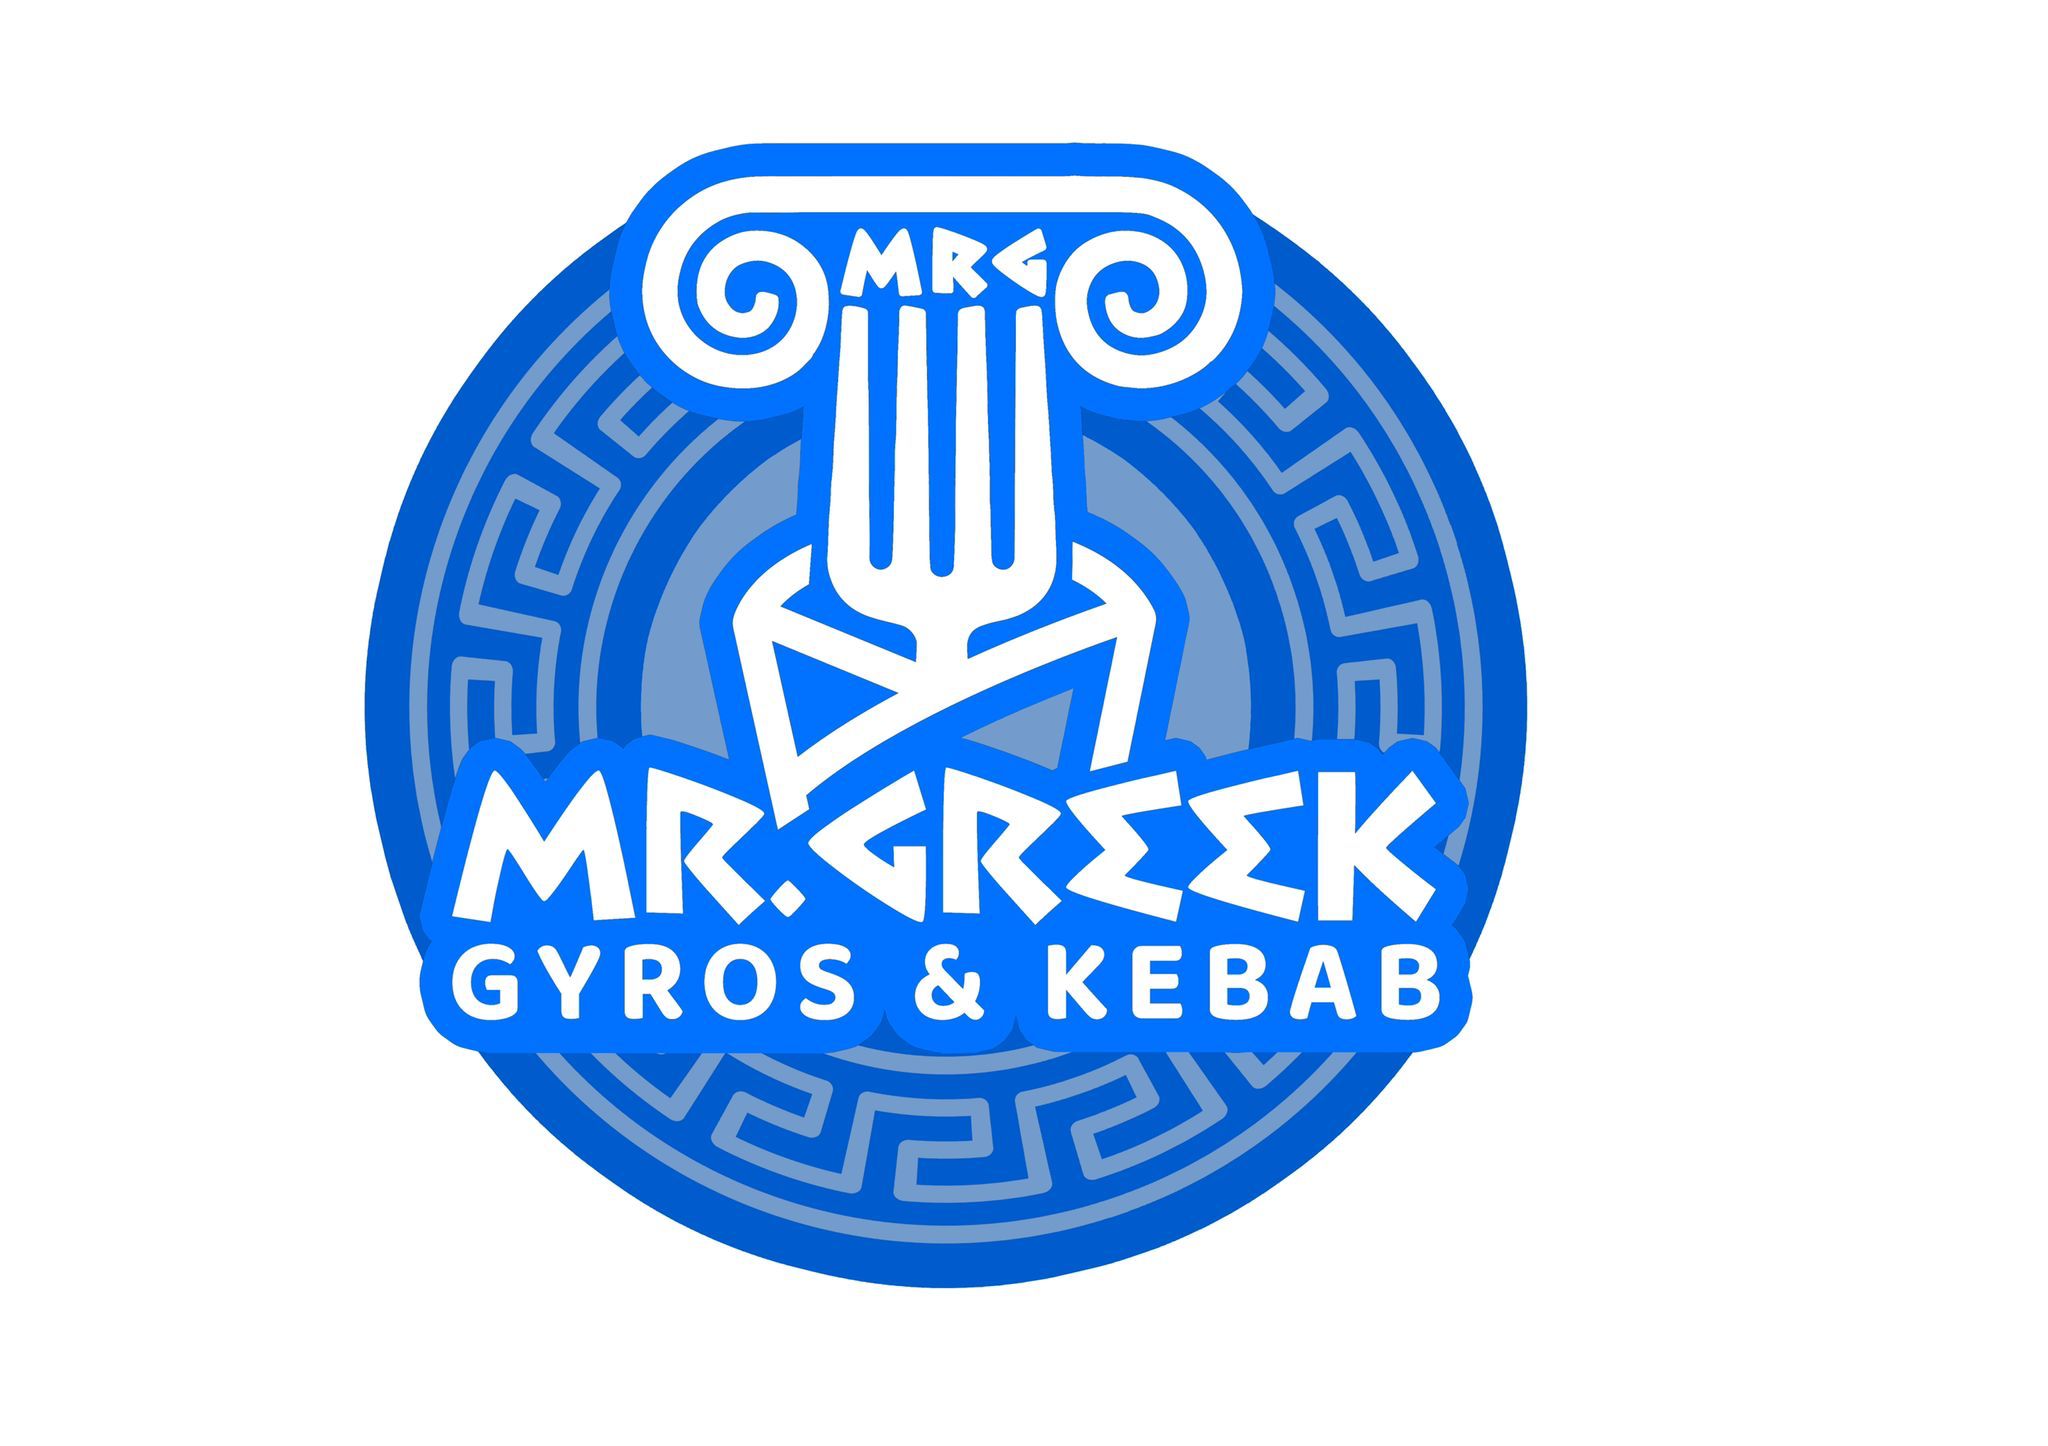 Mr. Greek Gyros & Kebab - autentična grčka kuhinja u srcu Beograda 3